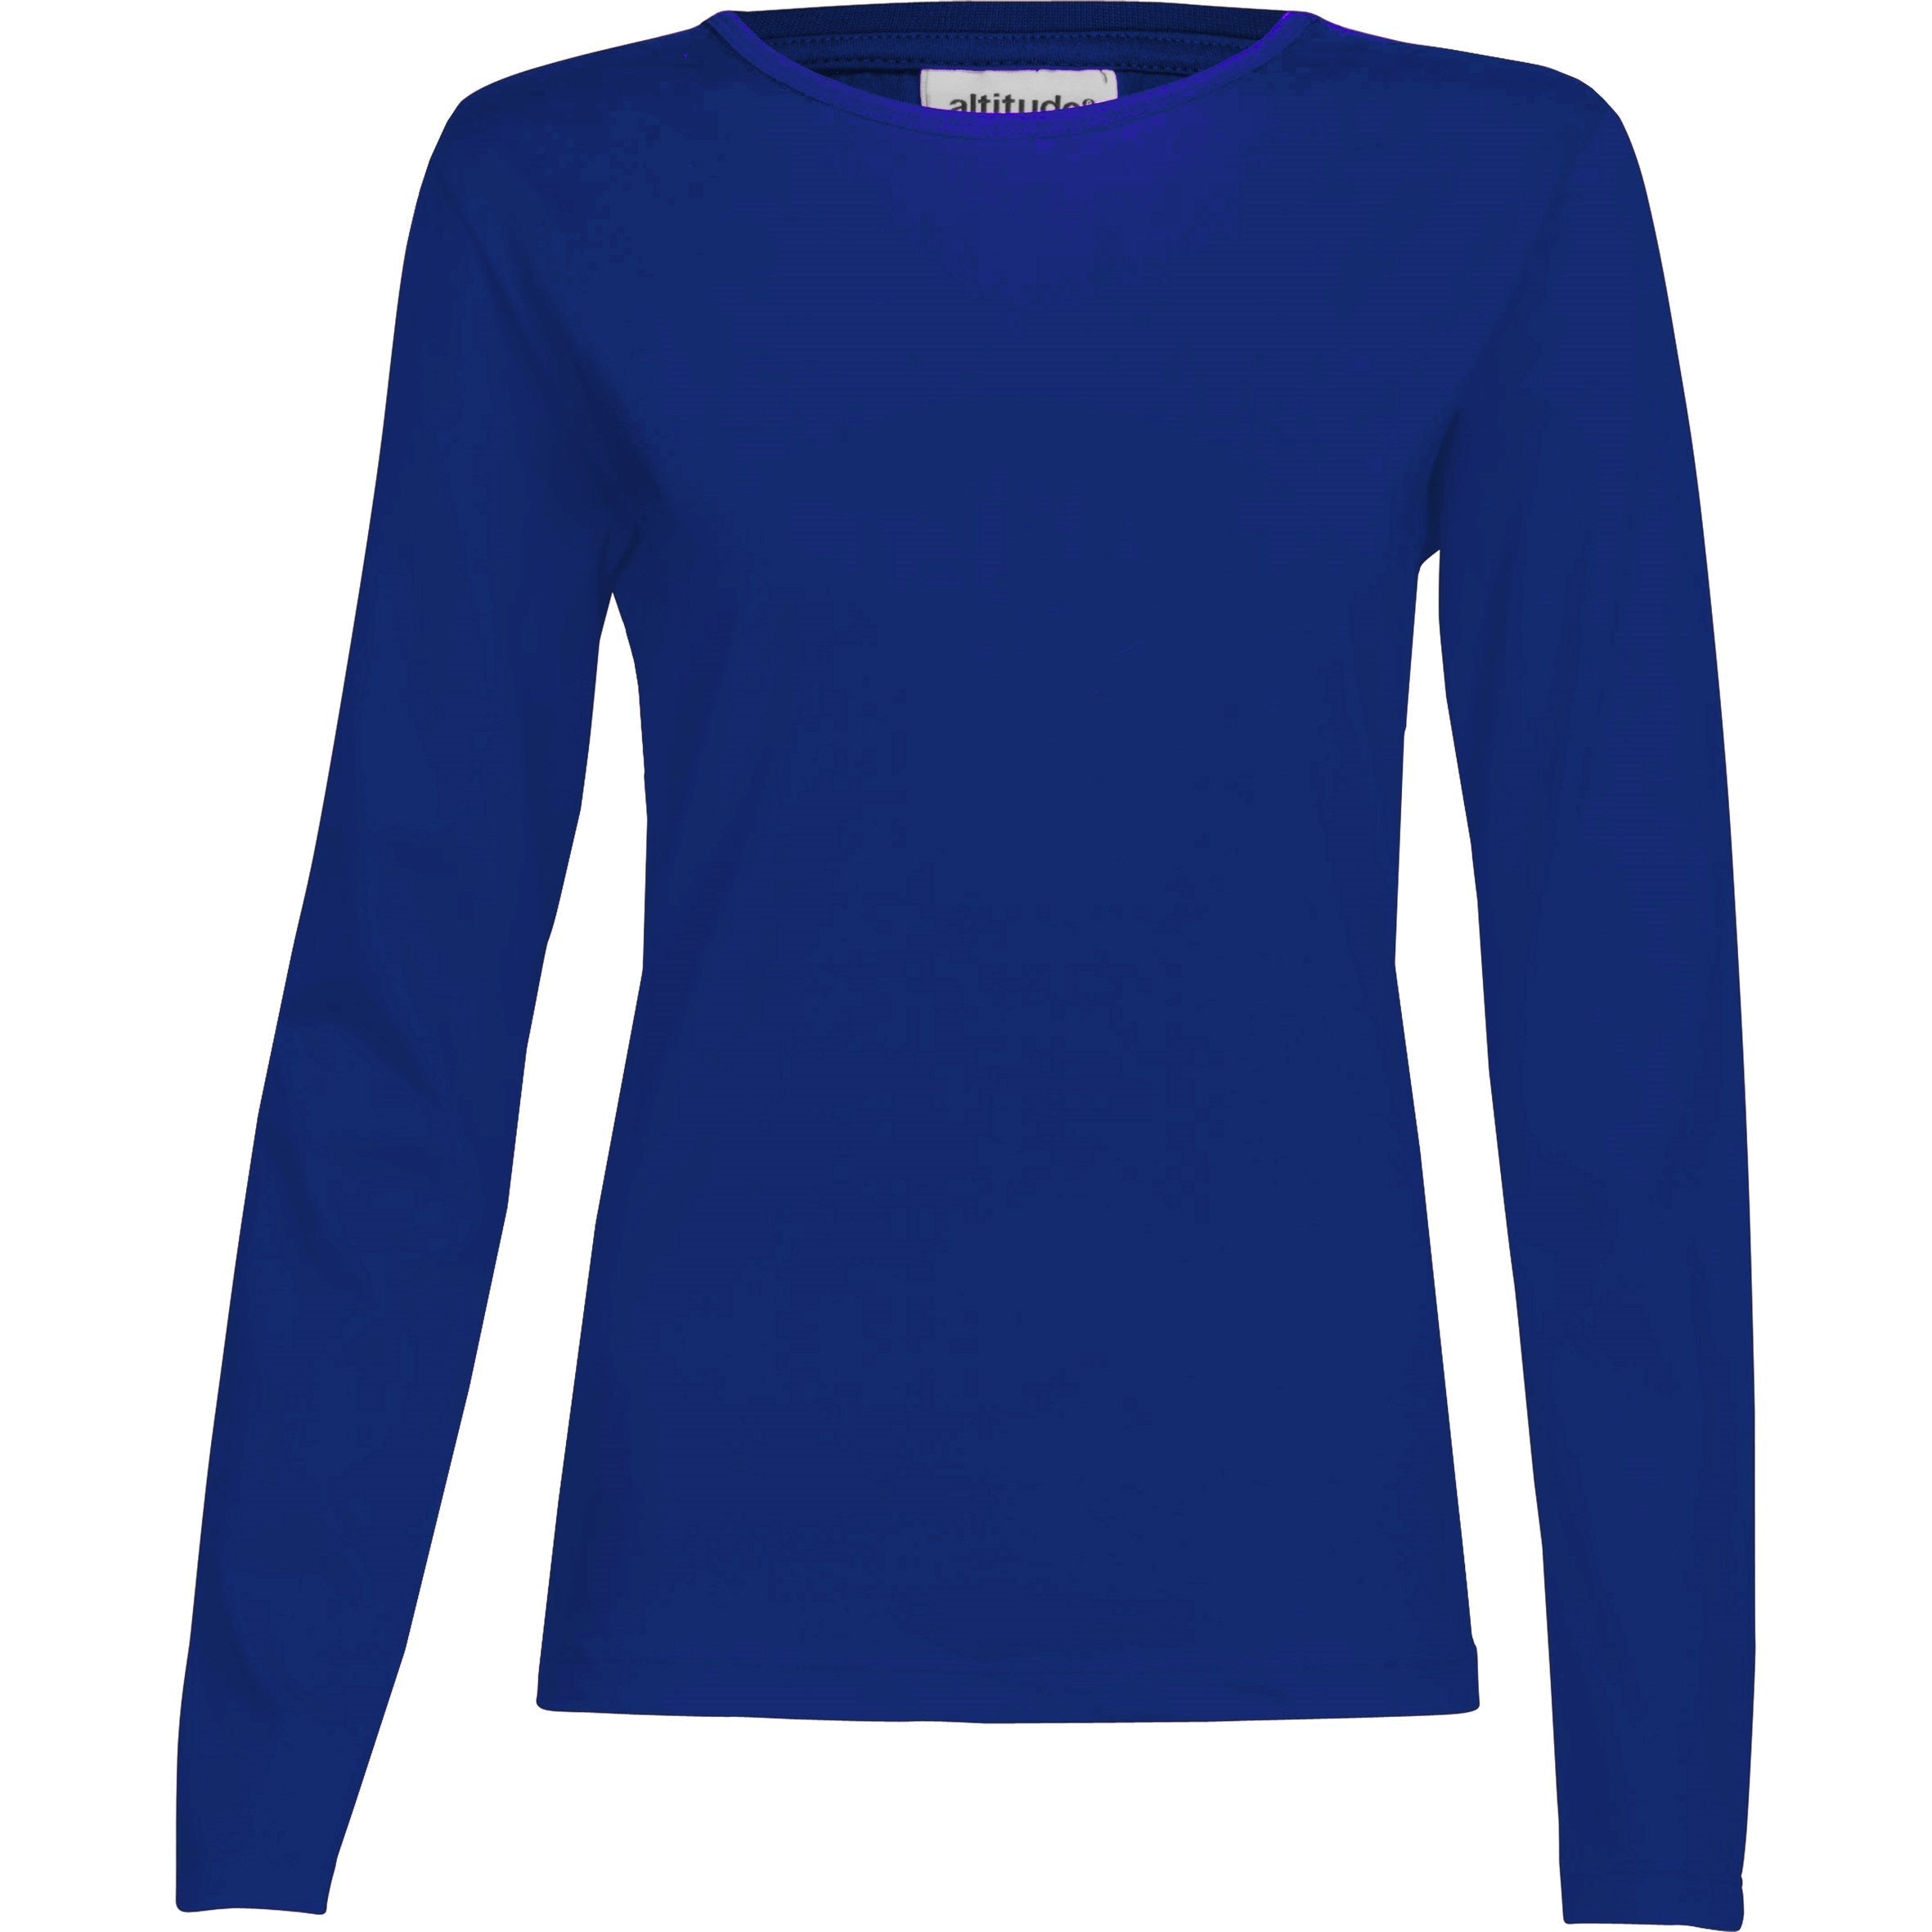 Ladies Long Sleeve Creative T-Shirt - Royal Blue Only-Shirts & Tops-2XL-Royal Blue-RB